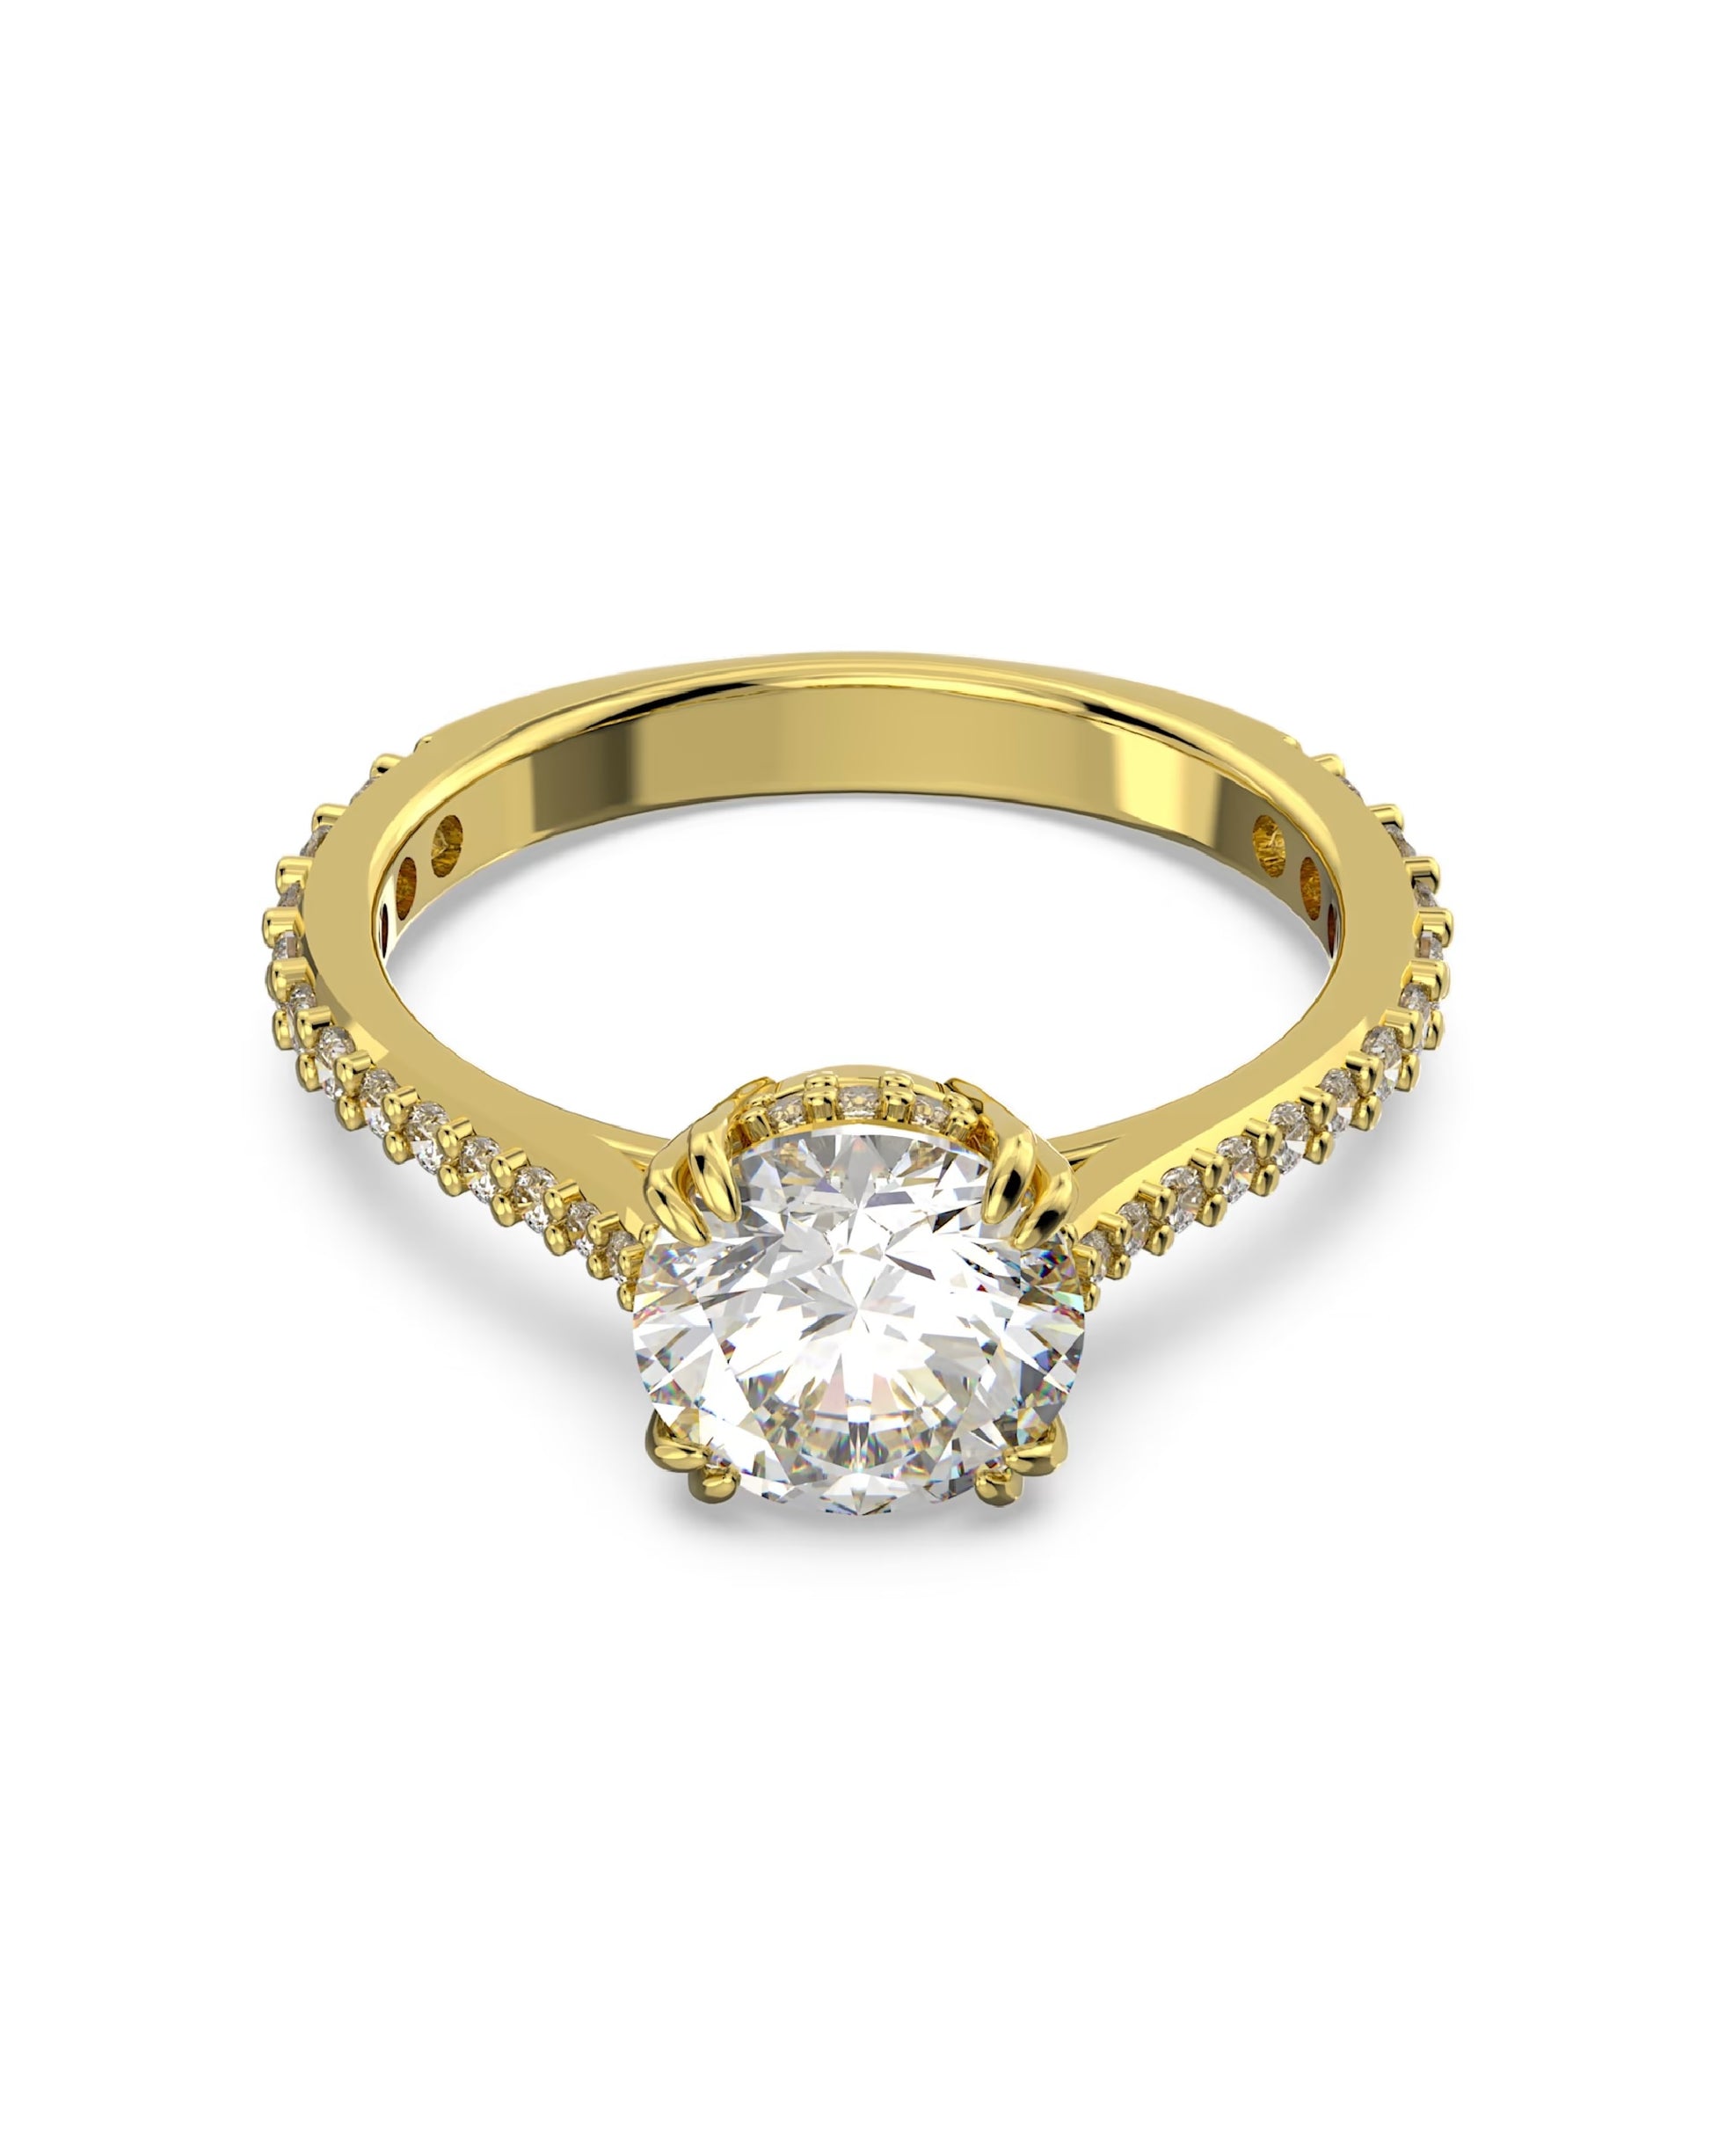 Swarovski 5642623 Swarovski Constella Ring, YELLOW Gold Tone Size 60 Rings